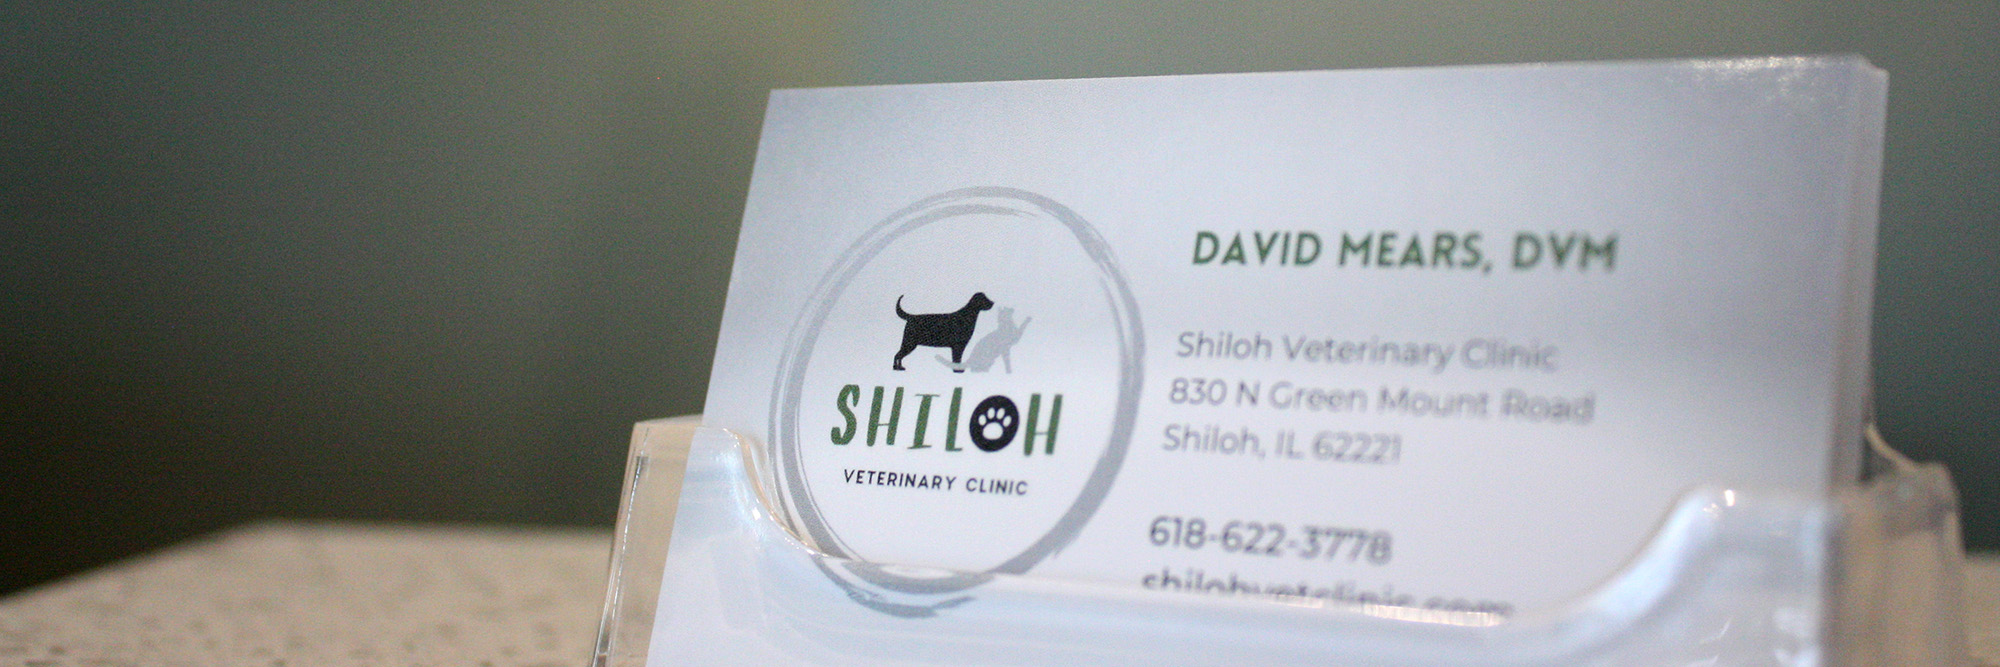 Shiloh Veterinary Clinic, David Mears, DVM